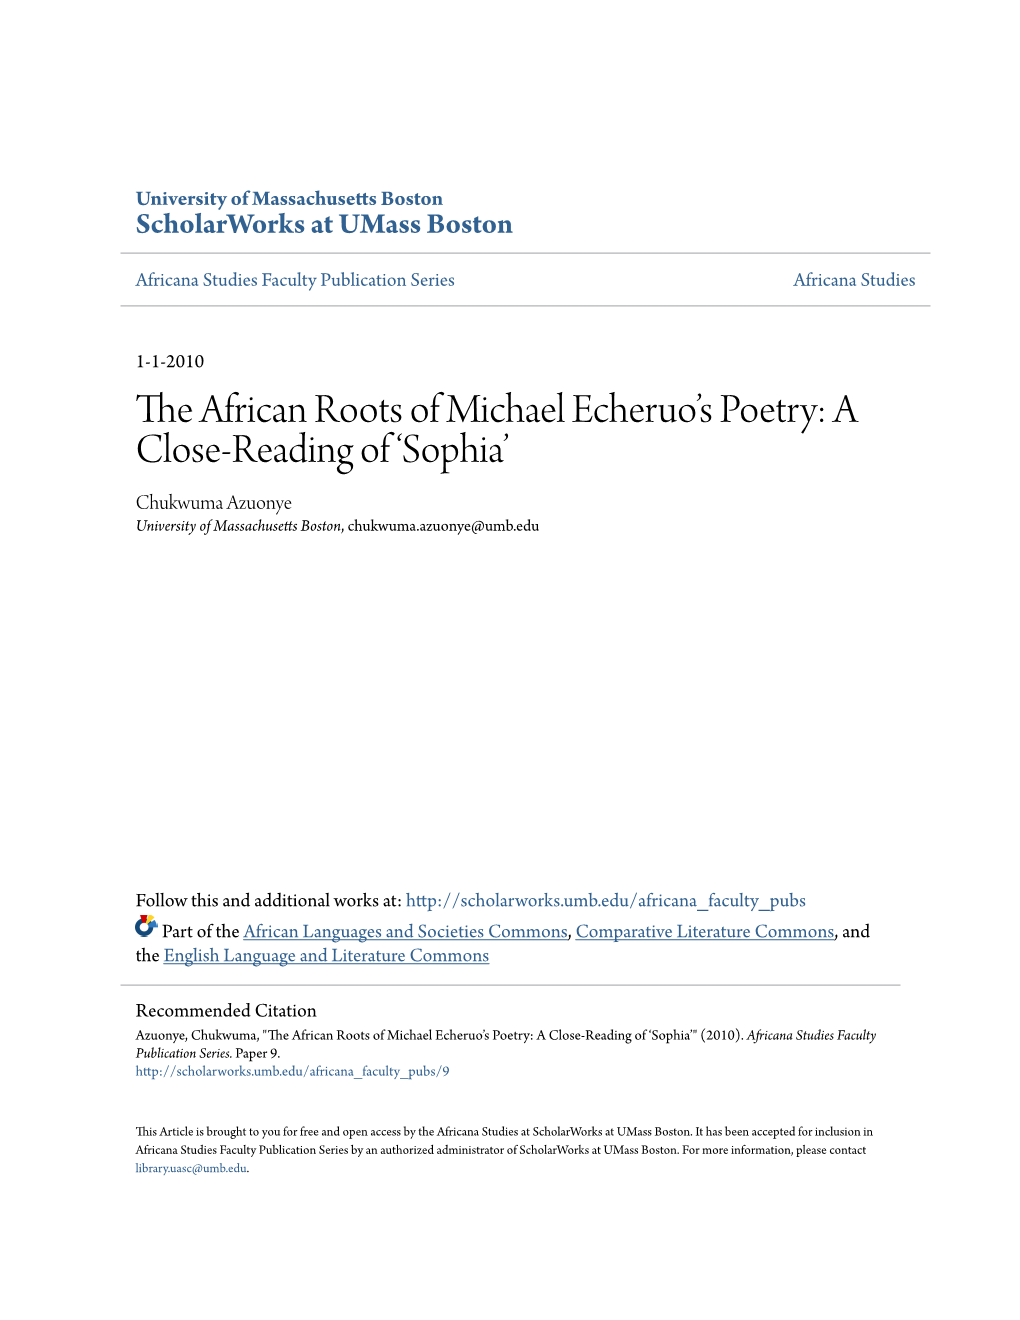 The African Roots of Michael Echeruo's Poetry